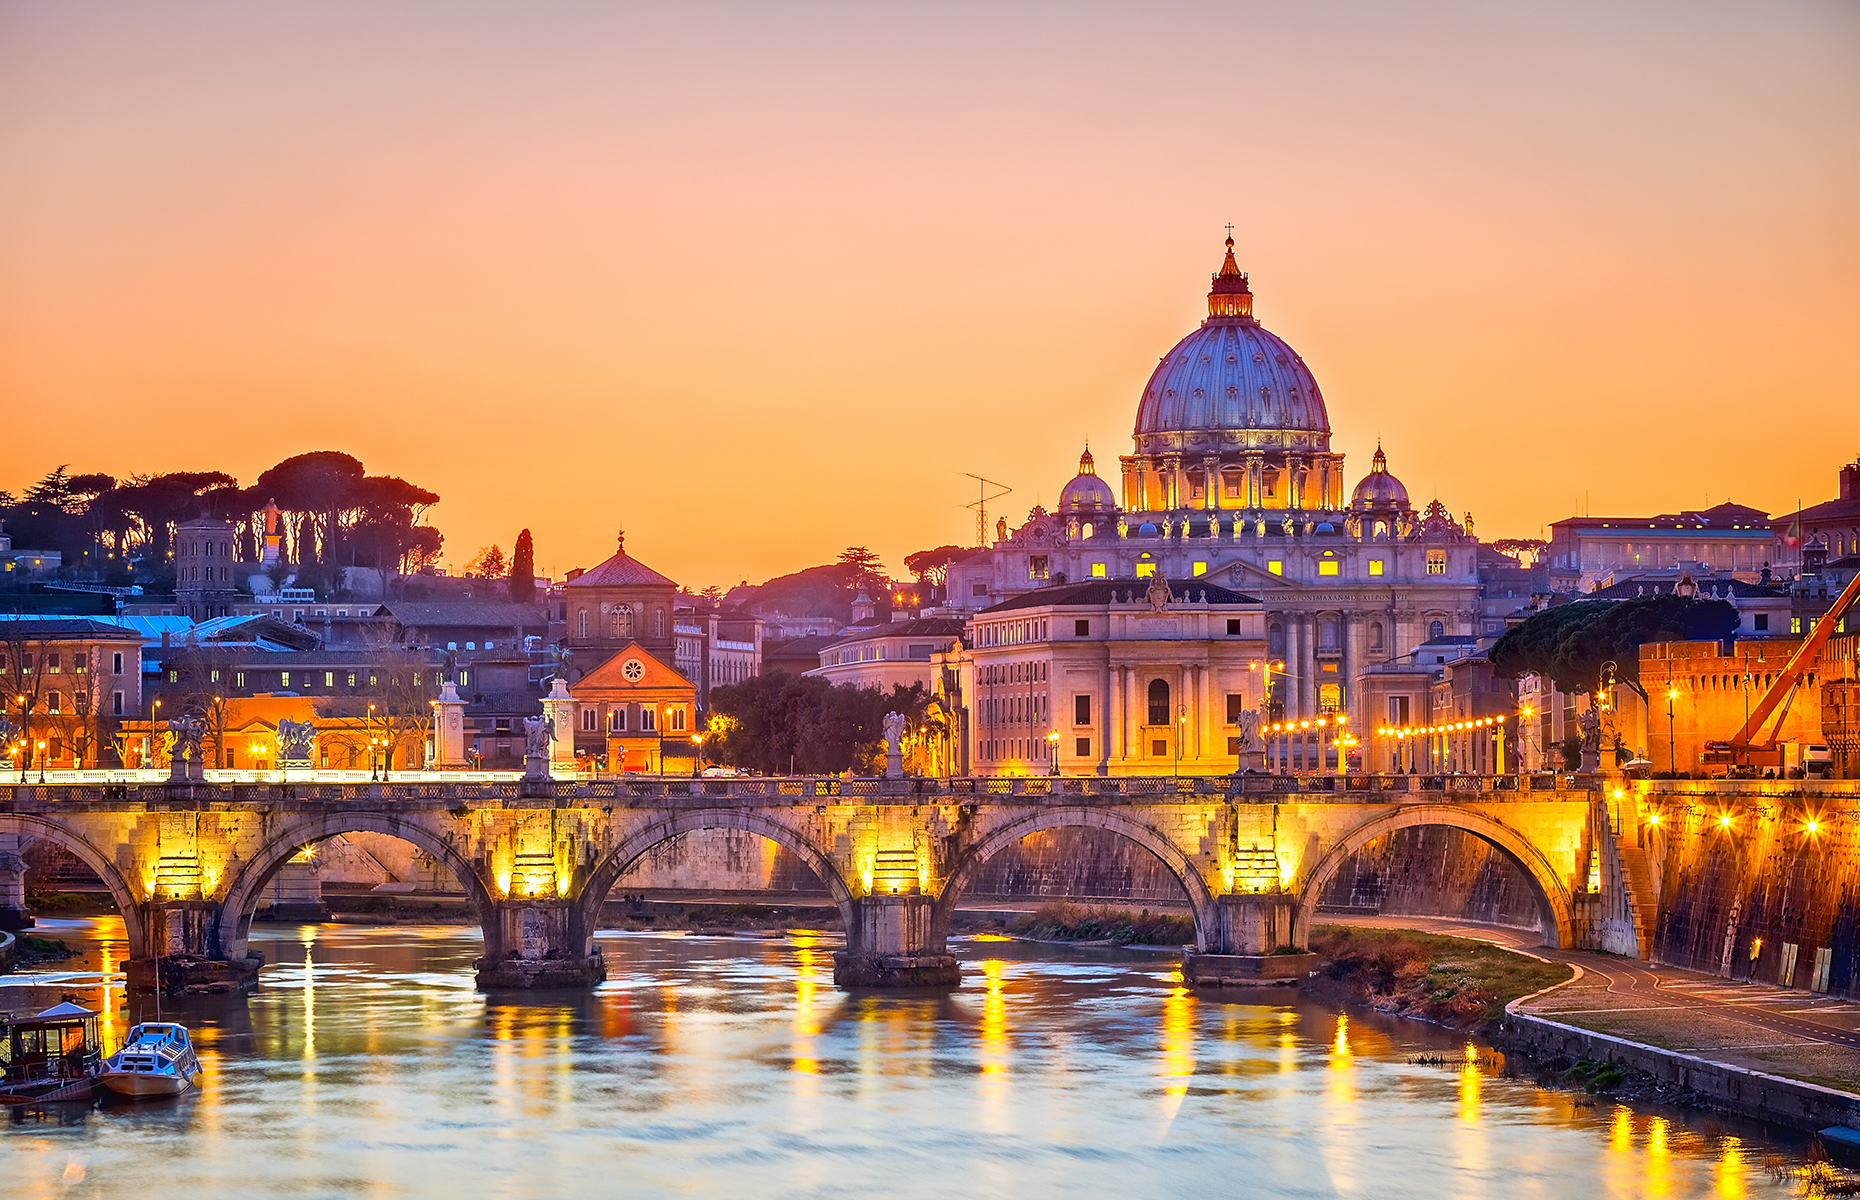 Rome, Italy at sunset. (Image: S.Borisov/Shutterstock)